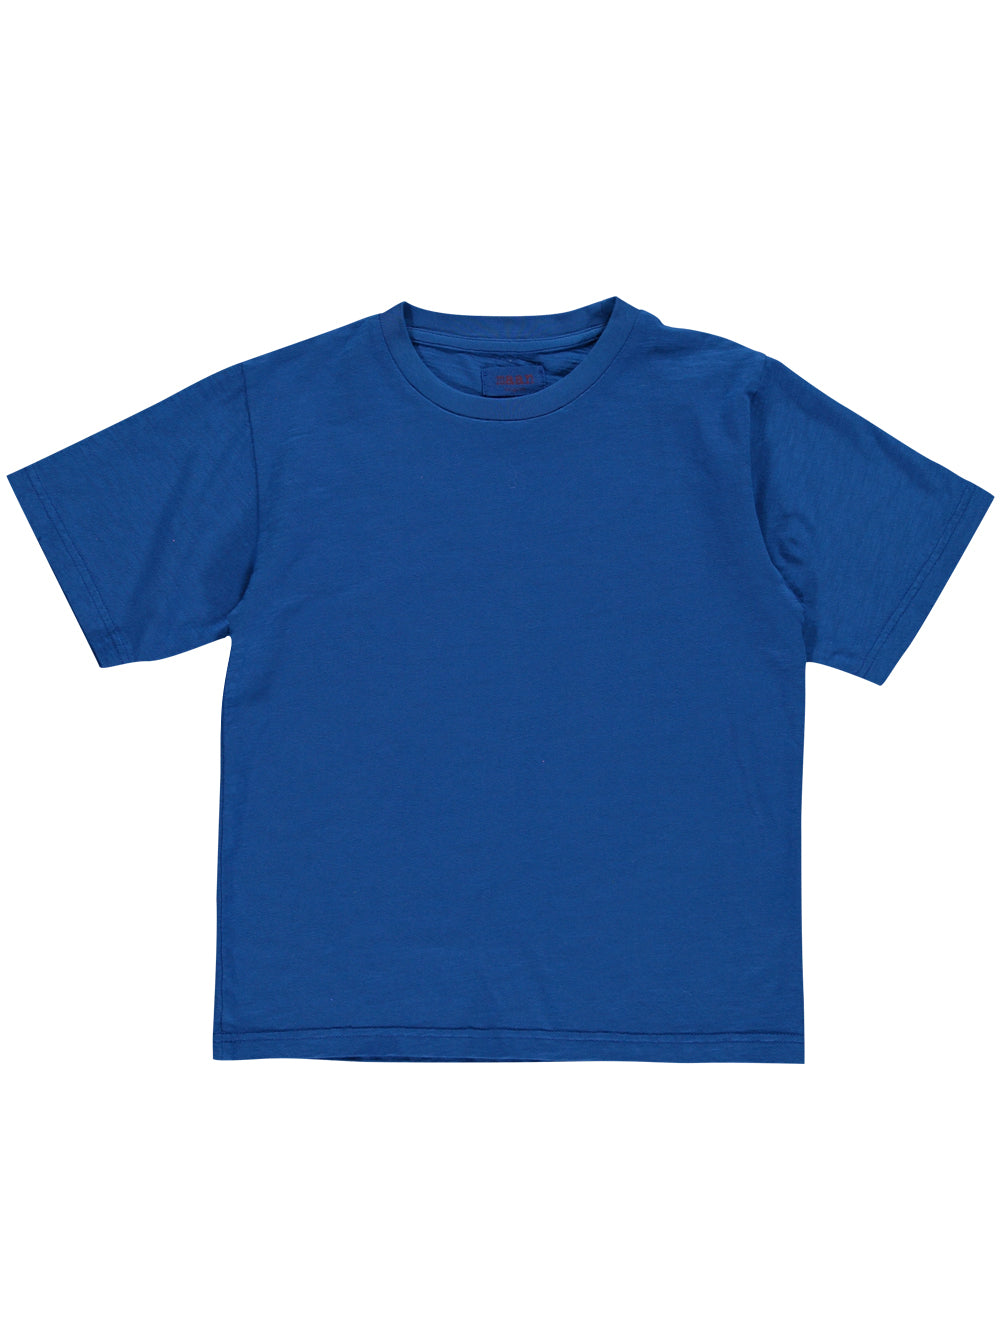 PREORDER: Martin Blue T-Shirt